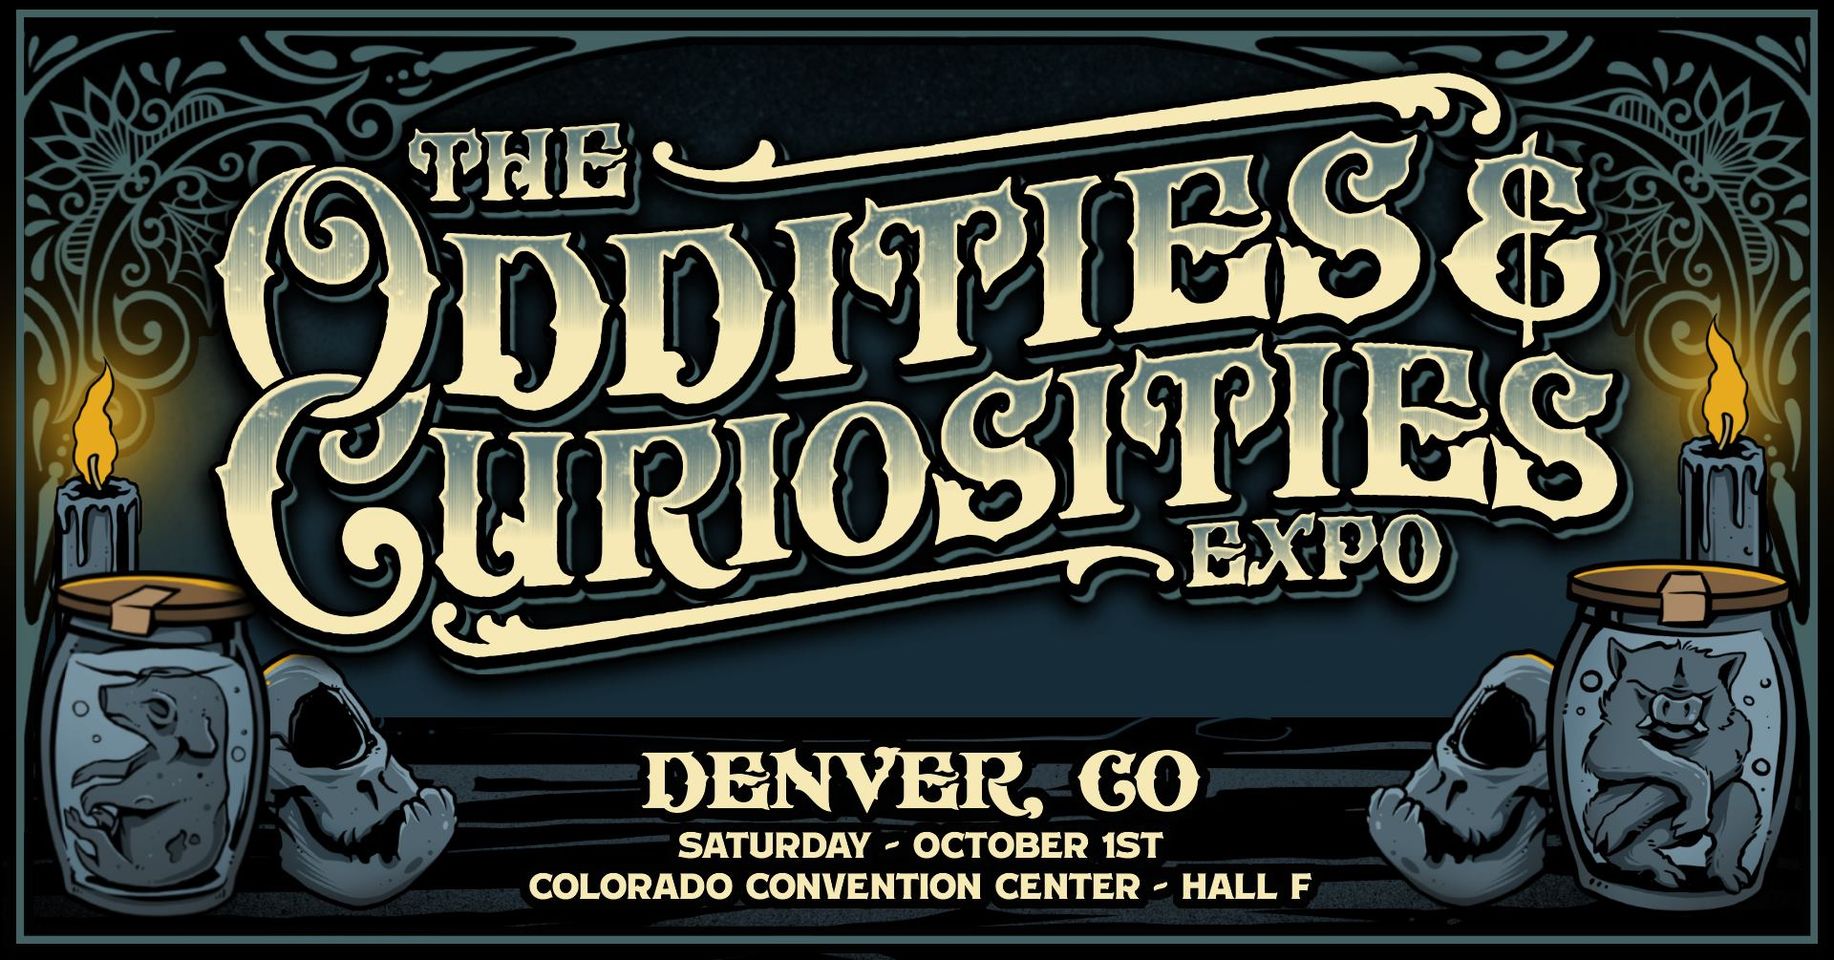 Denver Oddities and Curiosities Expo 2022